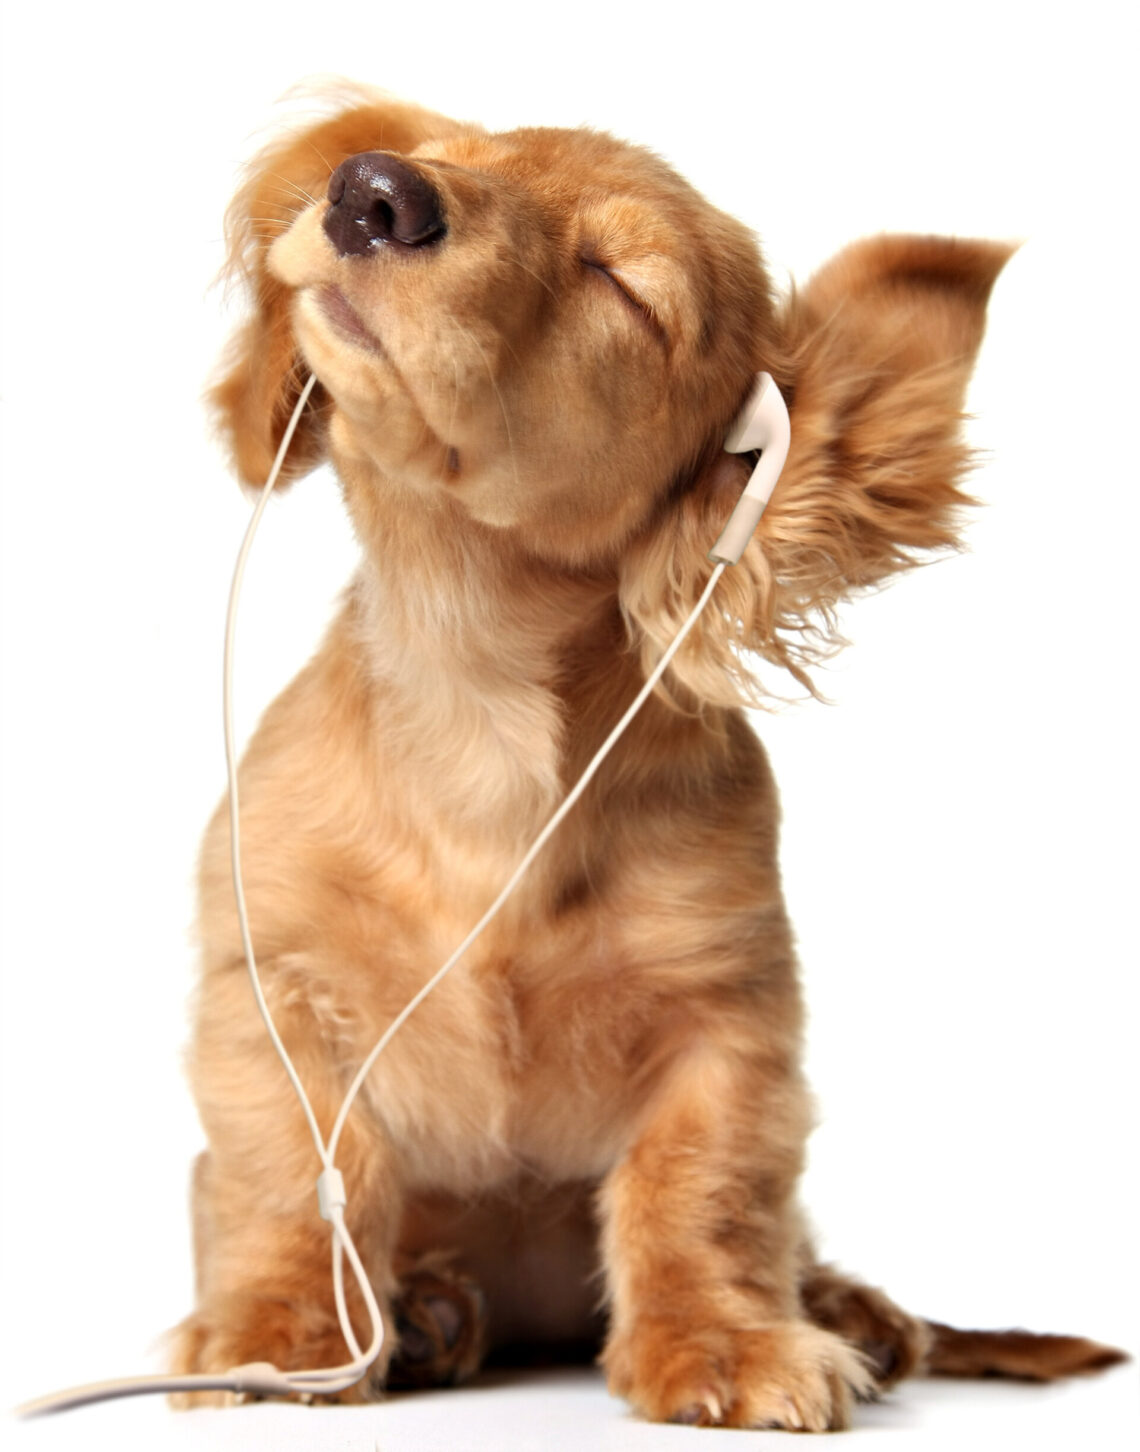 Junges Hund hört Musik über seine Kopfhörer.